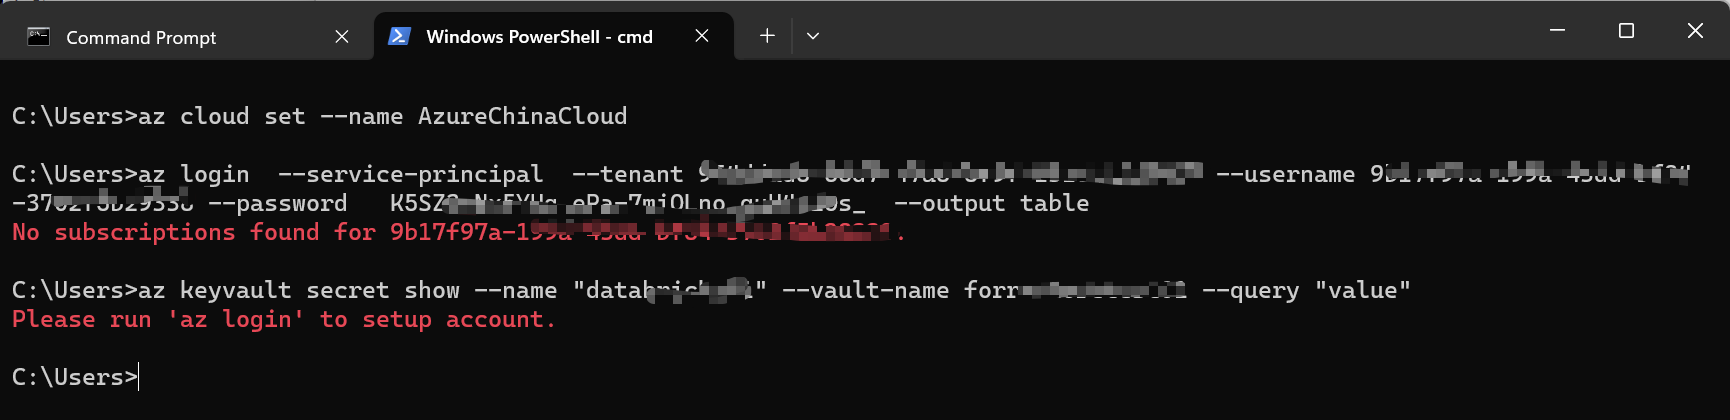 【Azure Key Vault】使用Azure CLI获取Key Vault 机密遇见问题后使用curl命令来获取机密内容_ci